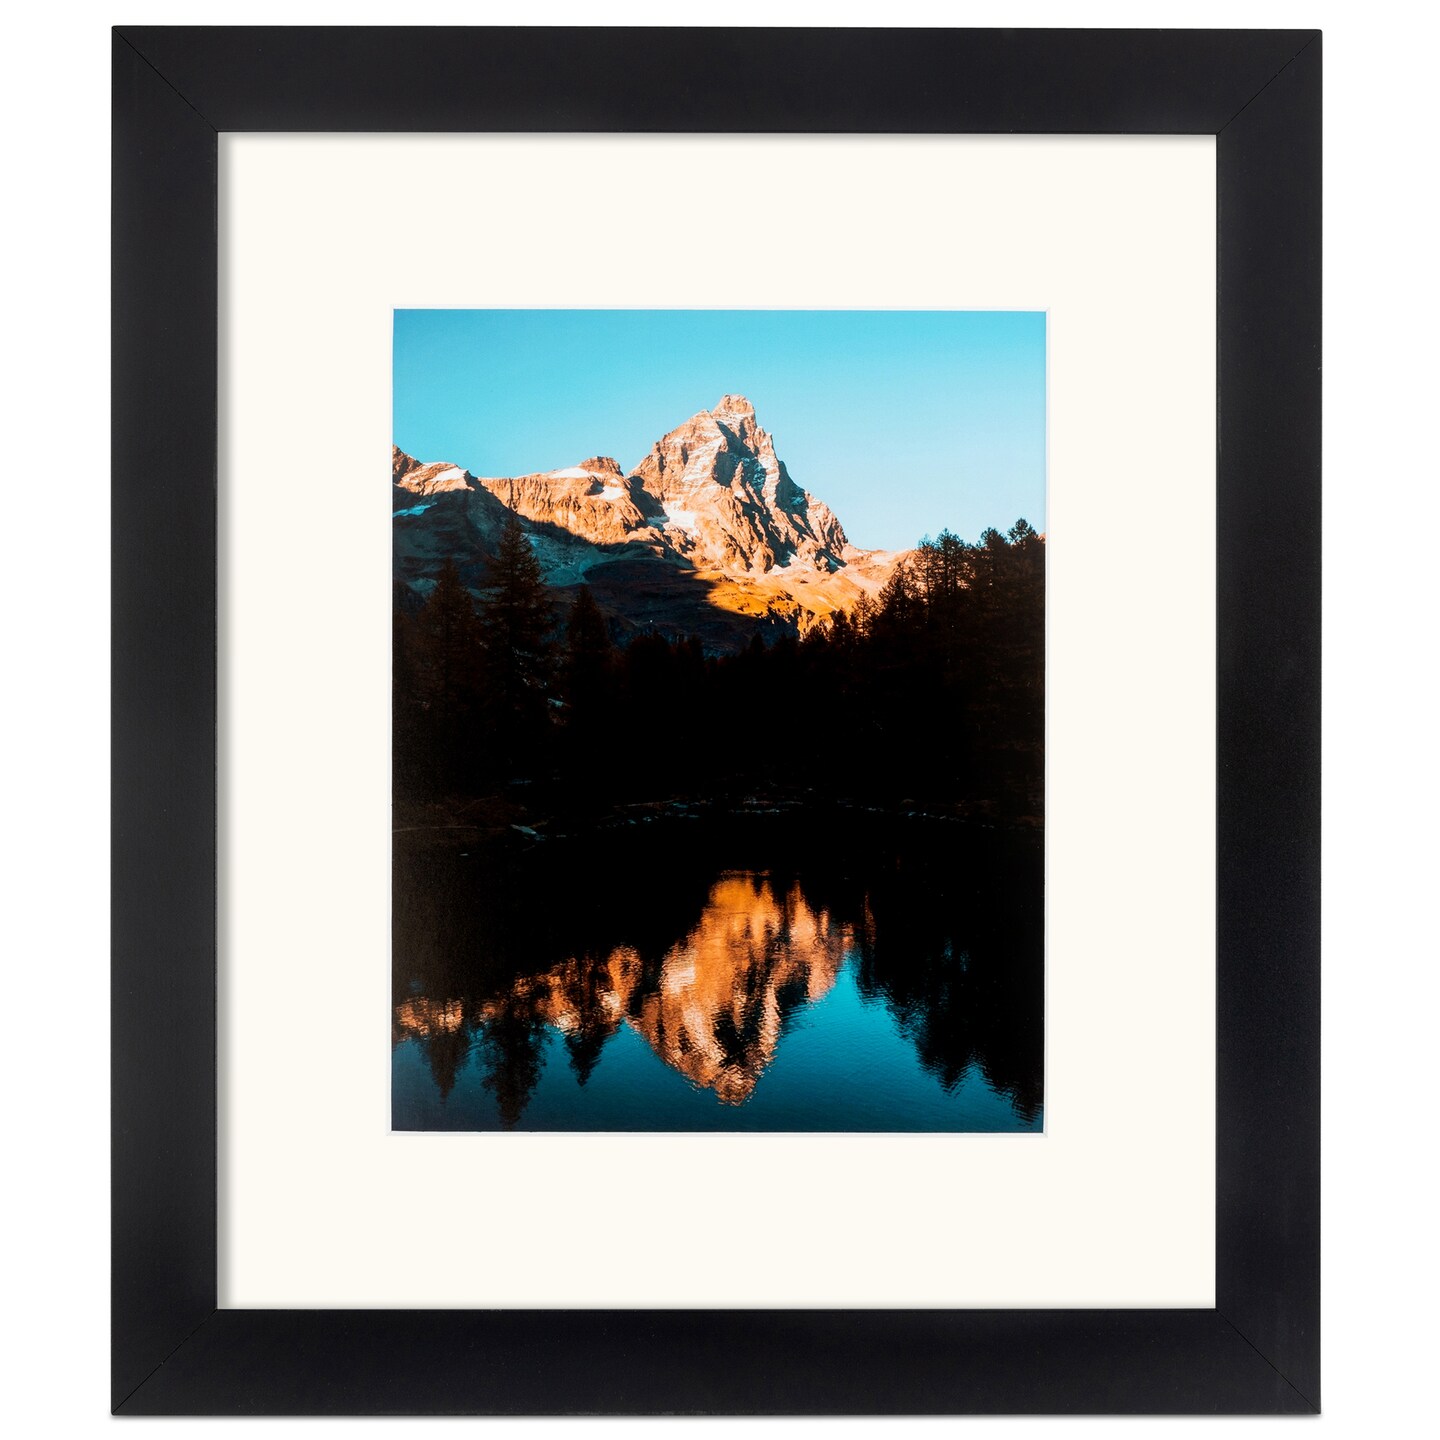  ArtToFrames 10x15 inch Satin White Frame Picture